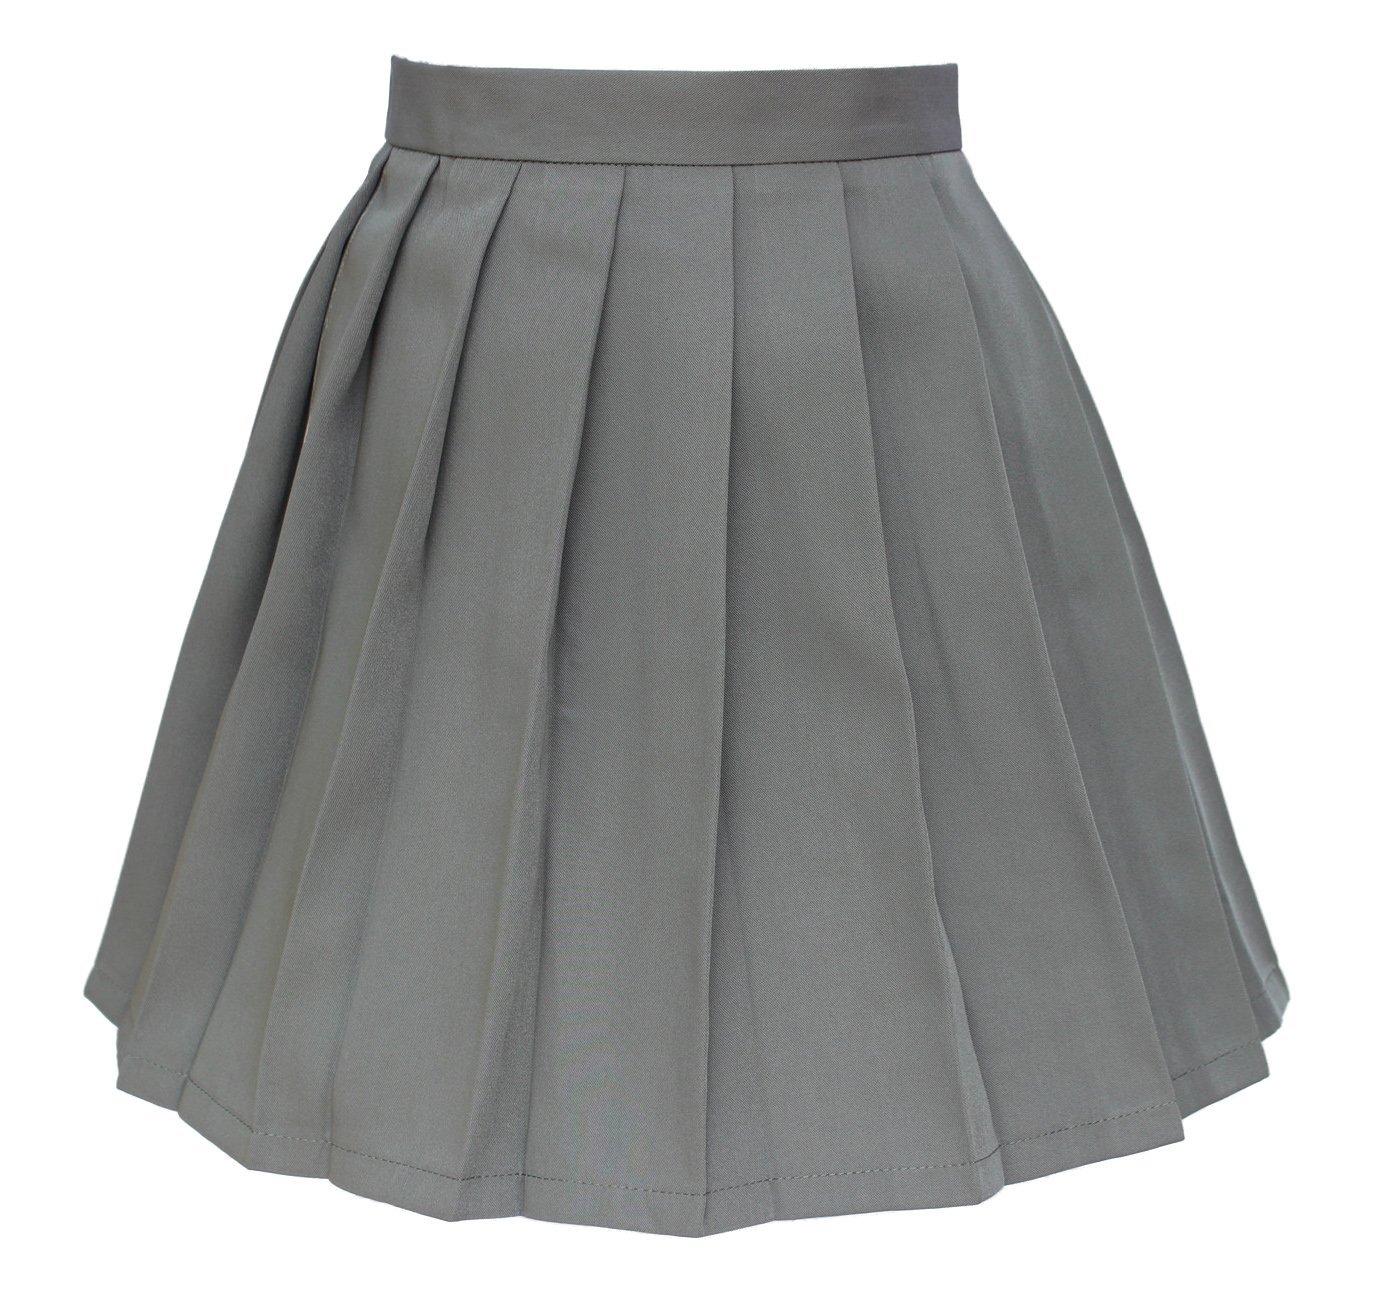 Girl's Japan School Solid Pleated Uniform fancy Skirts (S,Dark grey )